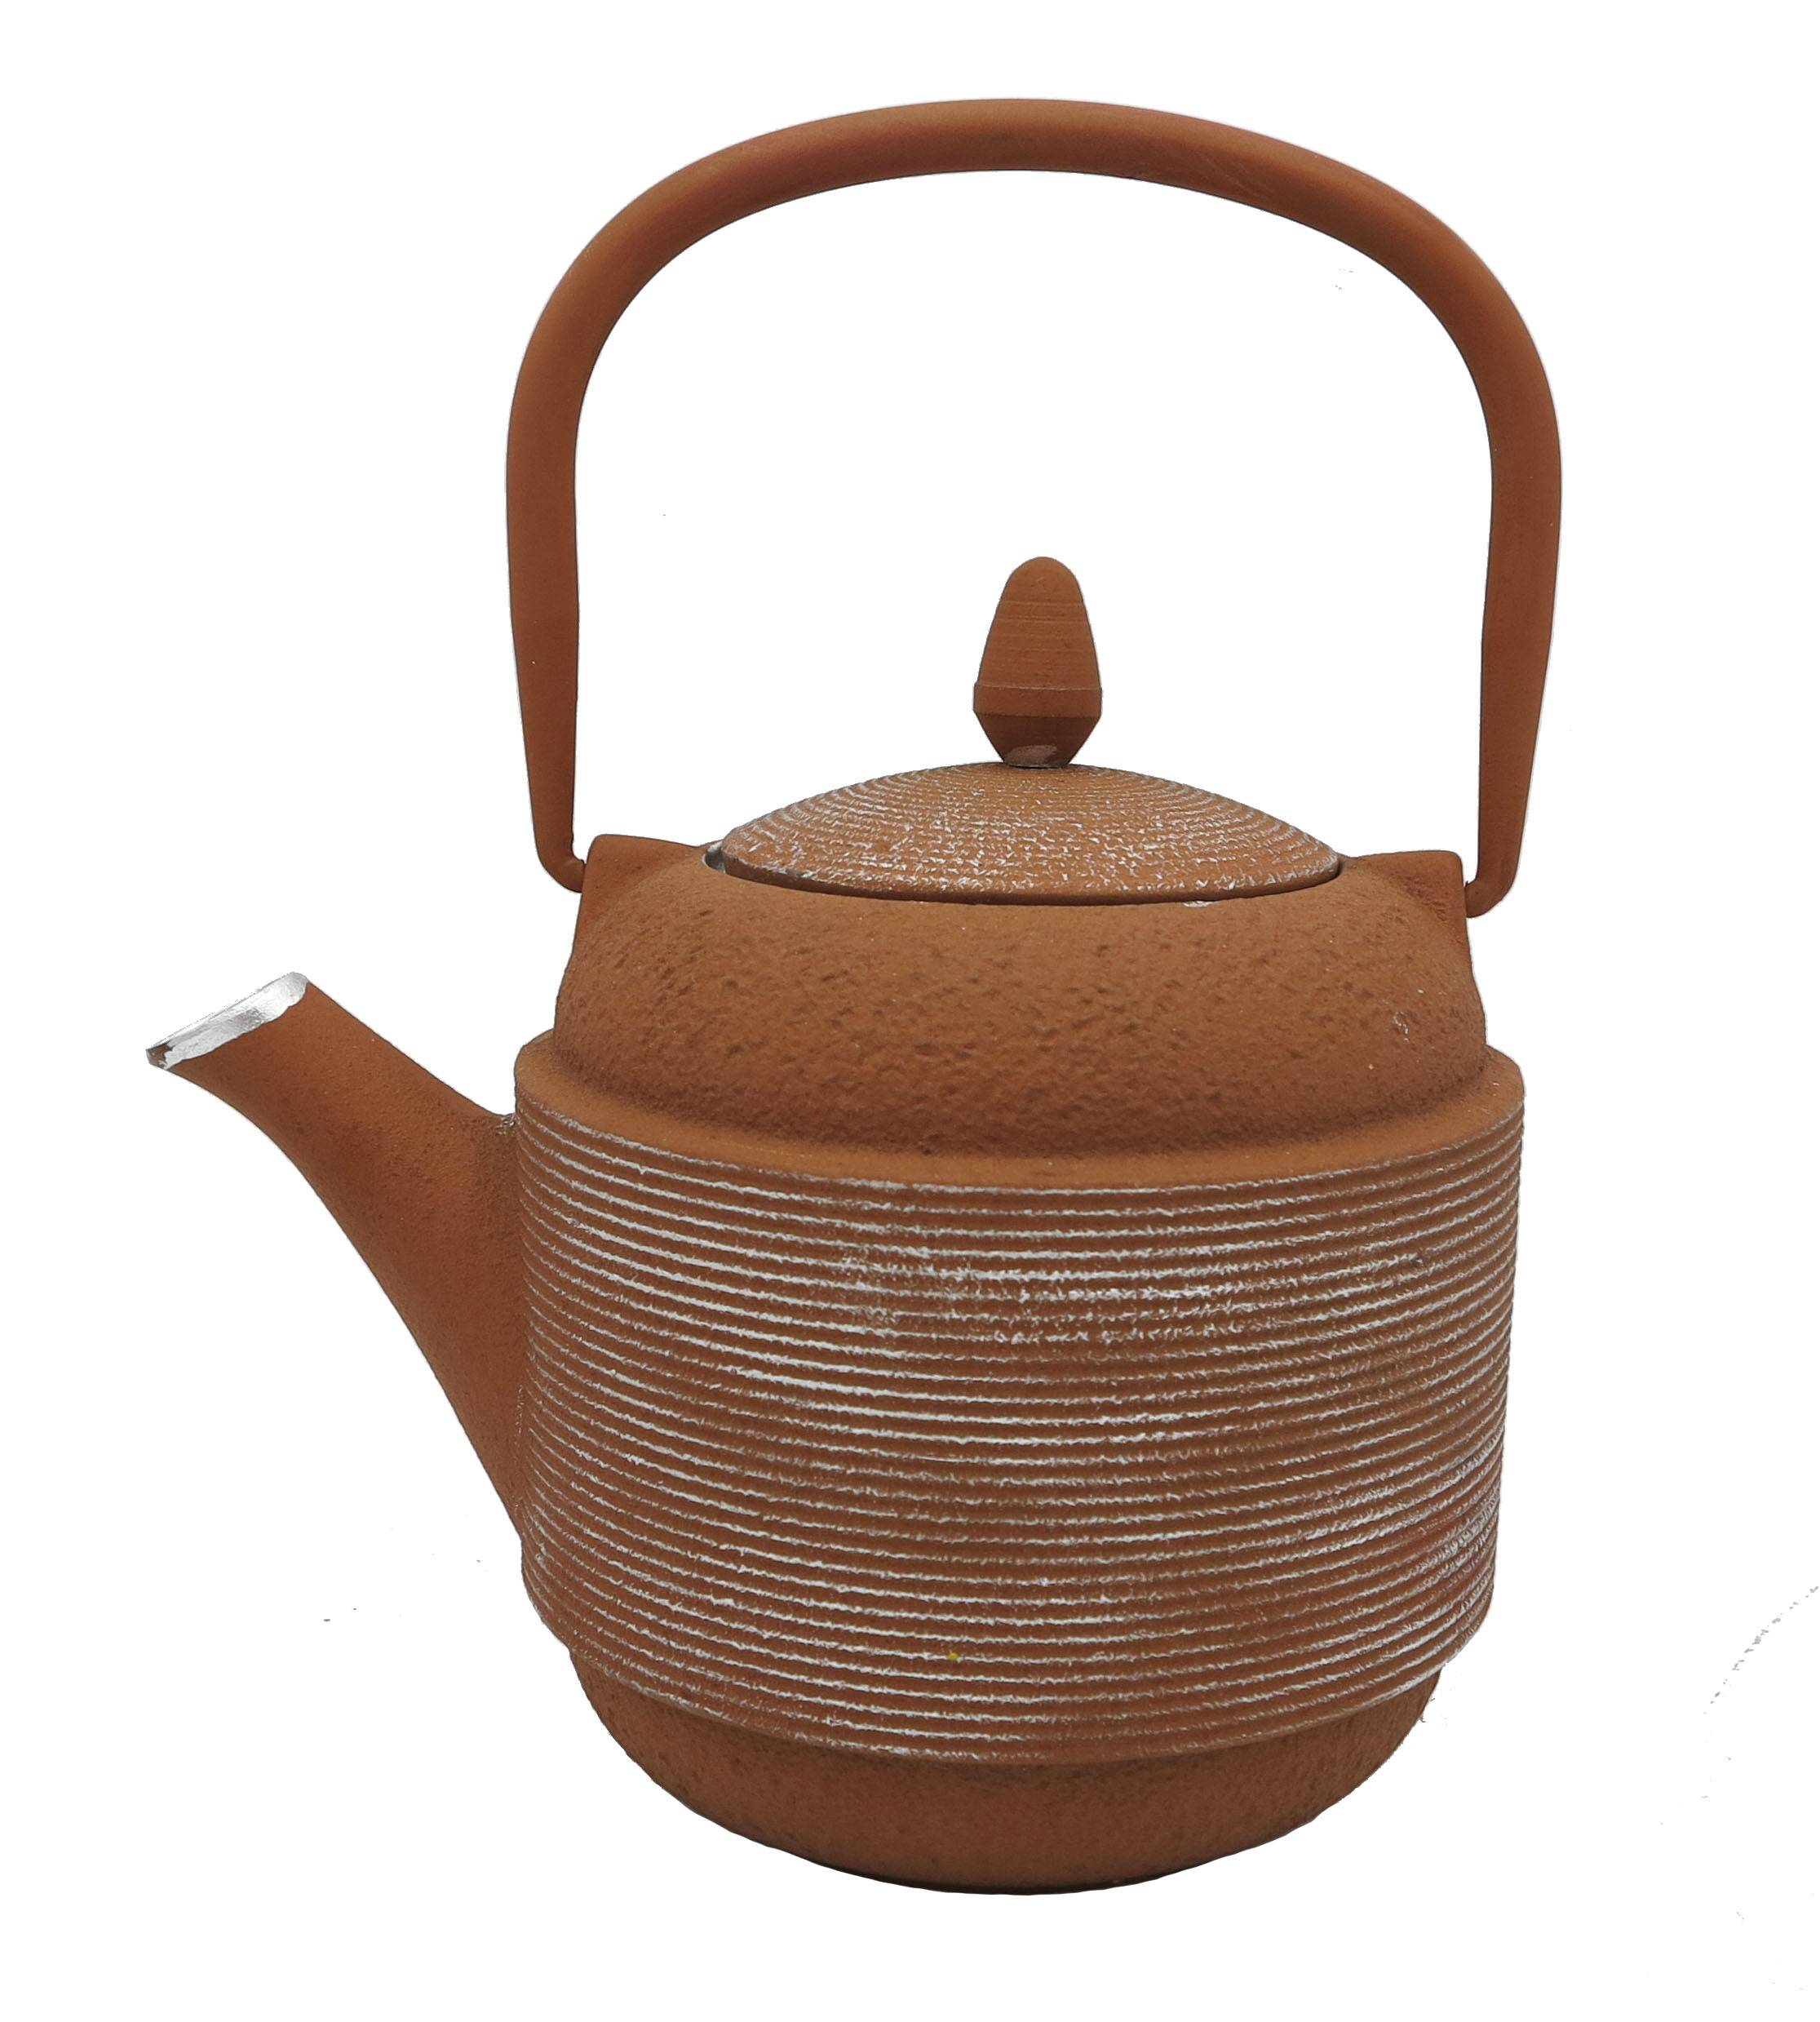 Metal Tea kettle 800ML cast iron enamel coated teapot